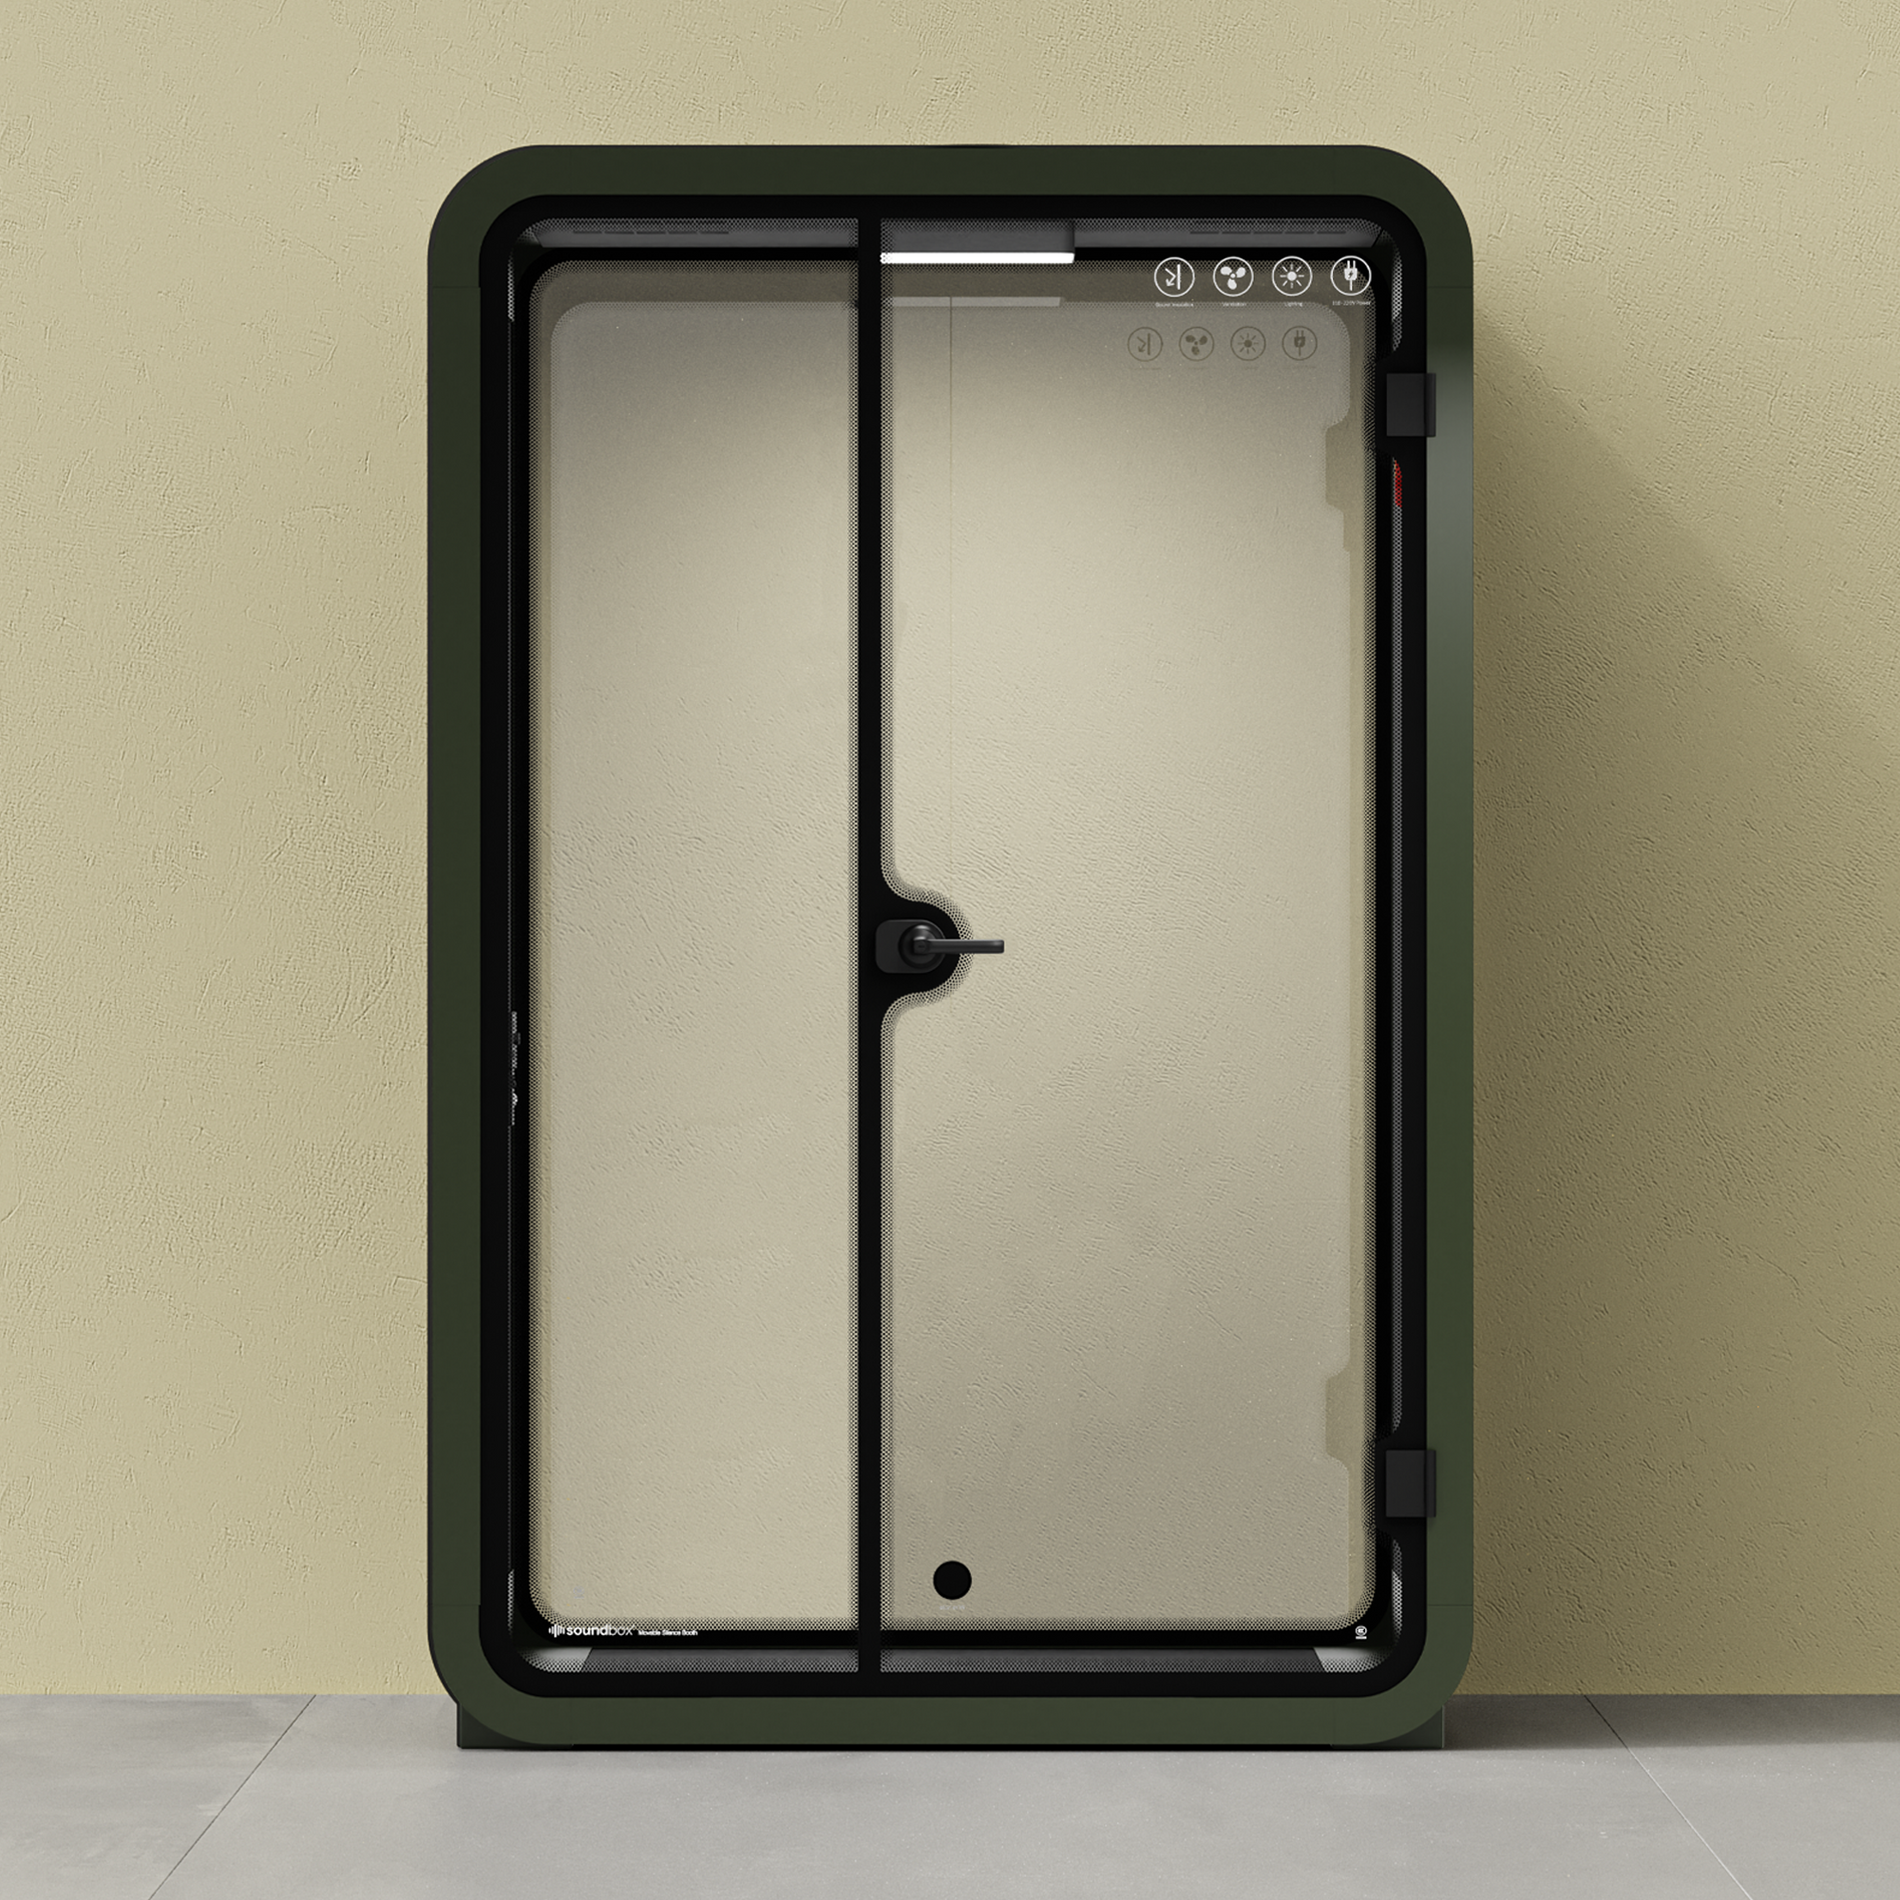 Quell - Office Pod - 2 PersonDark Green / Dark Gray / No Furniture